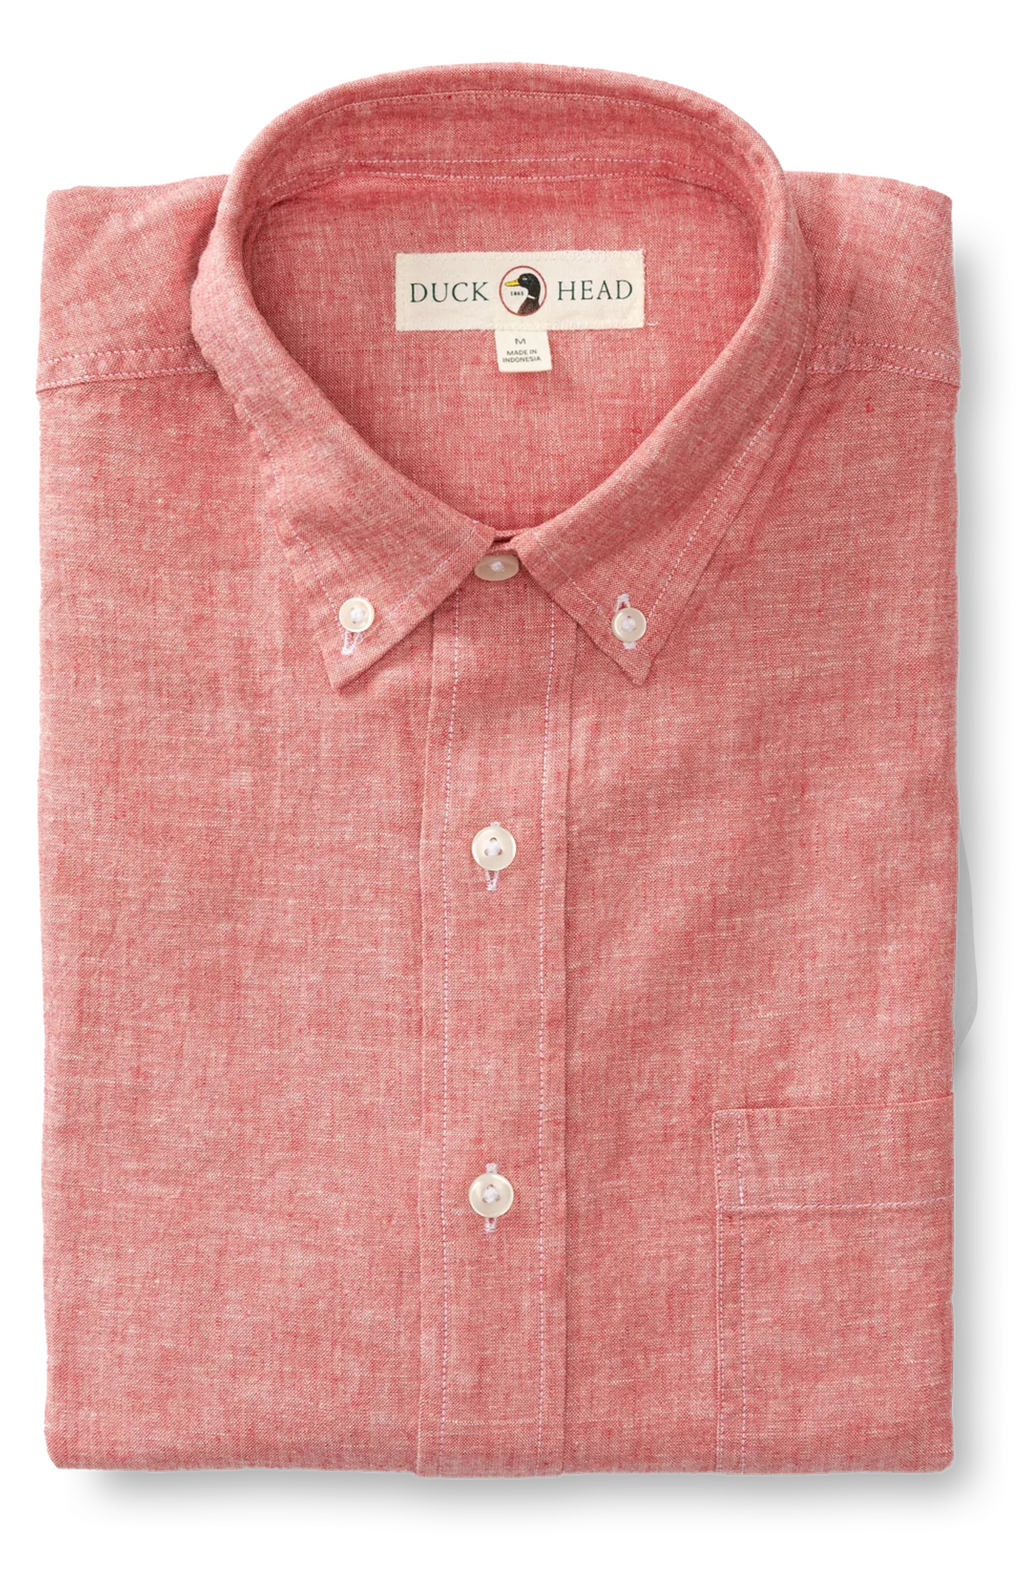 Duck Head - Linen Cotton Oxford Sport Shirt Wallace Solid